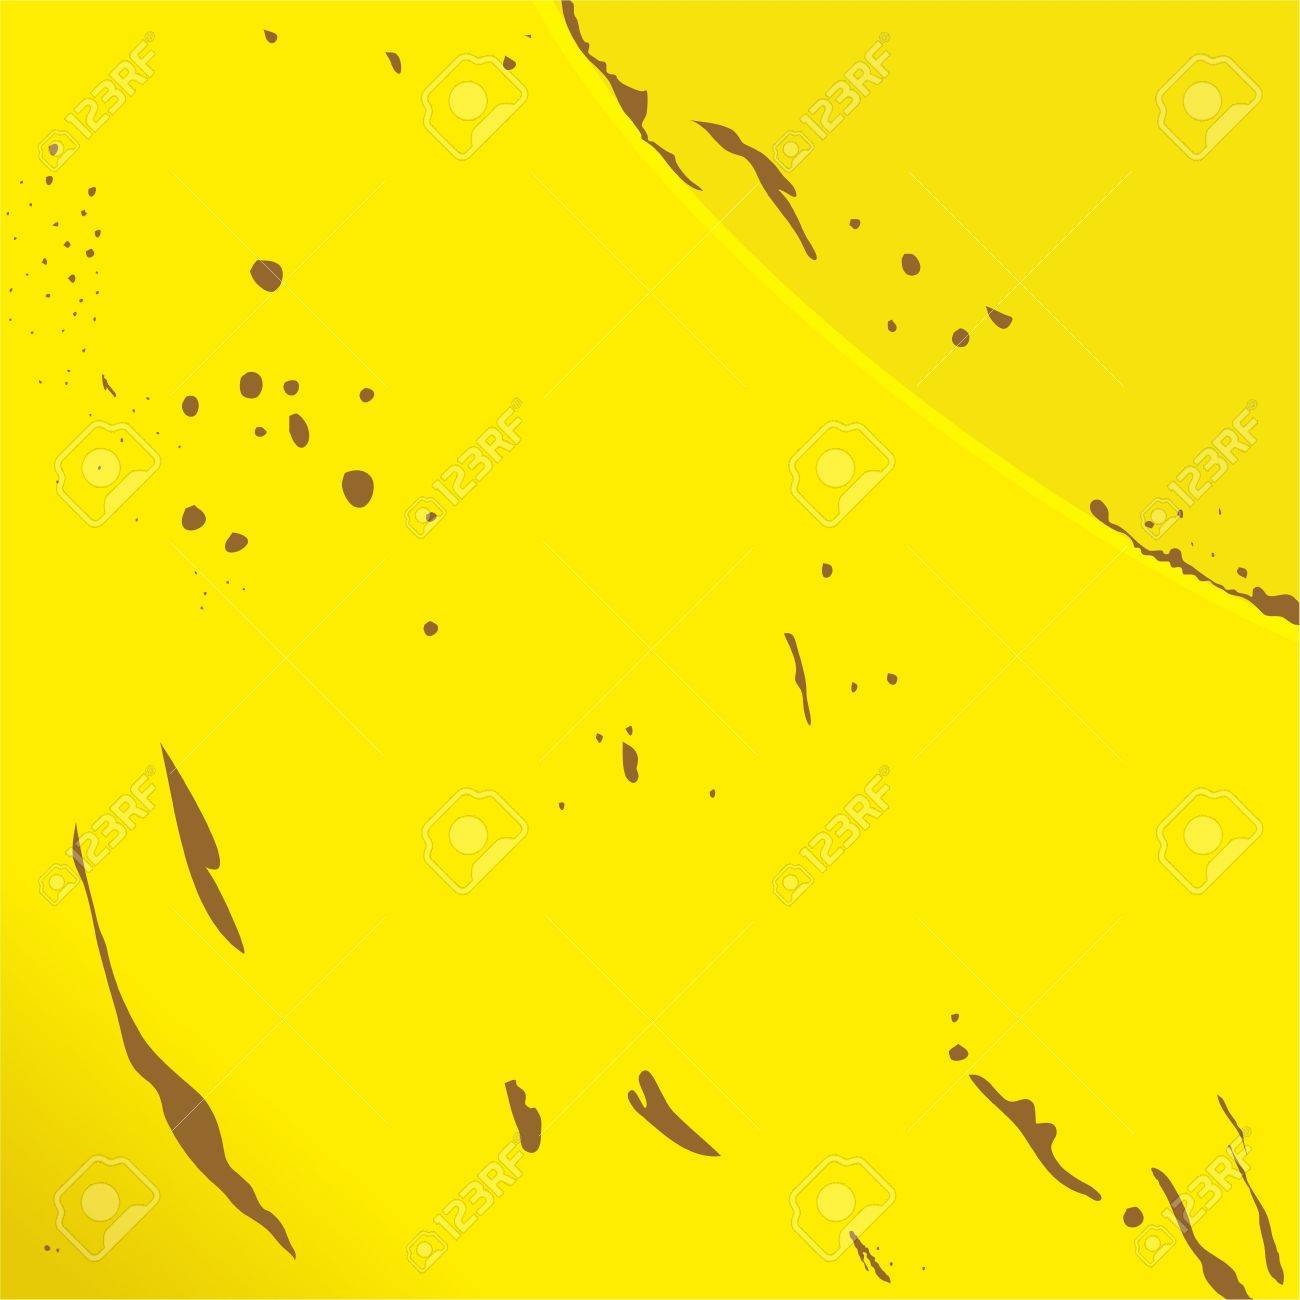 Banana Skin Anic Background Wallpaper Design Stock Photo